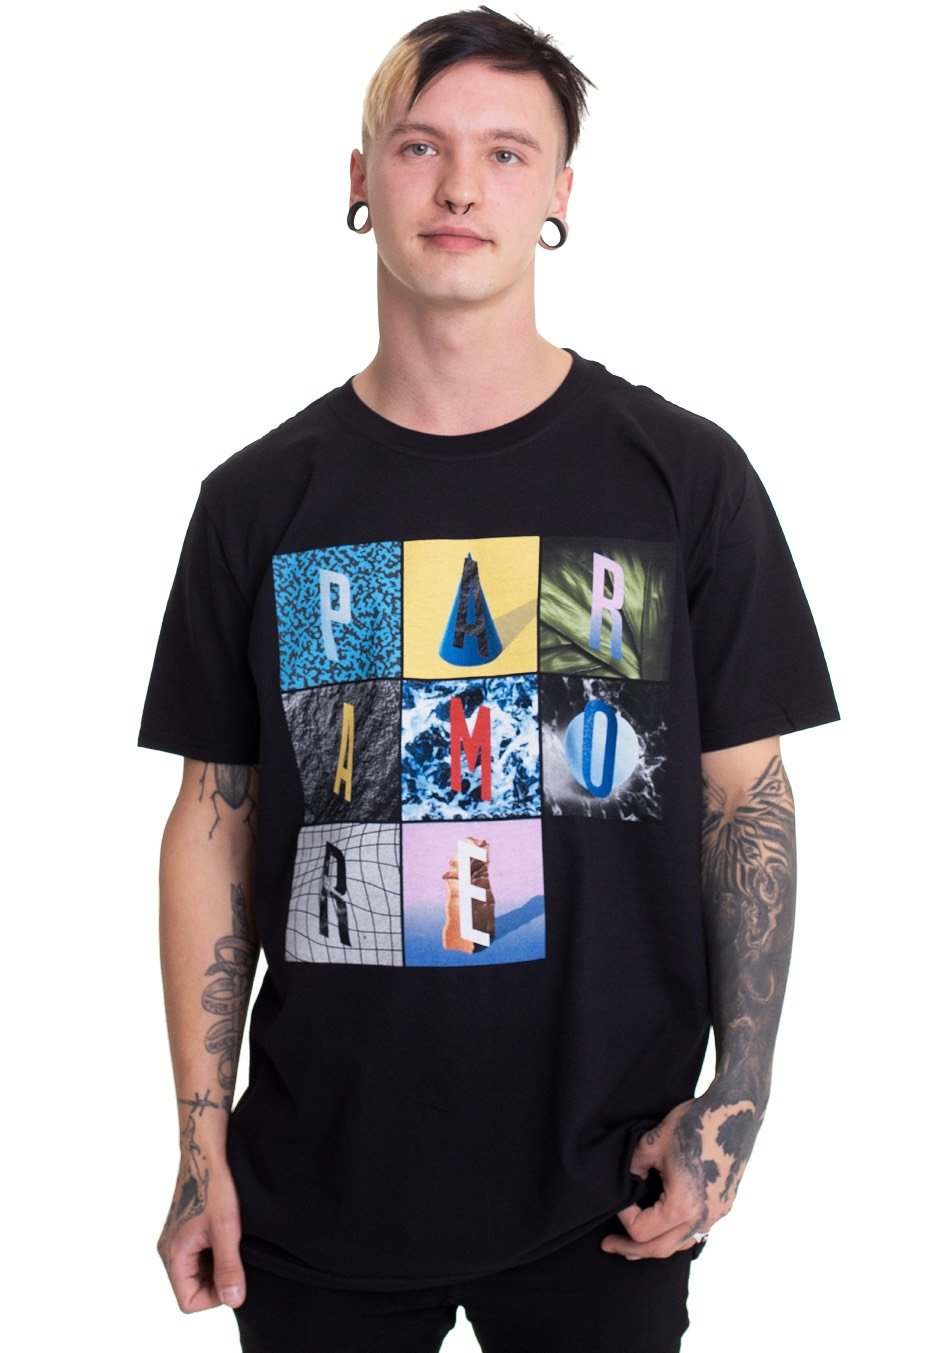 T Shirt Paramore Store, SAVE 32% 